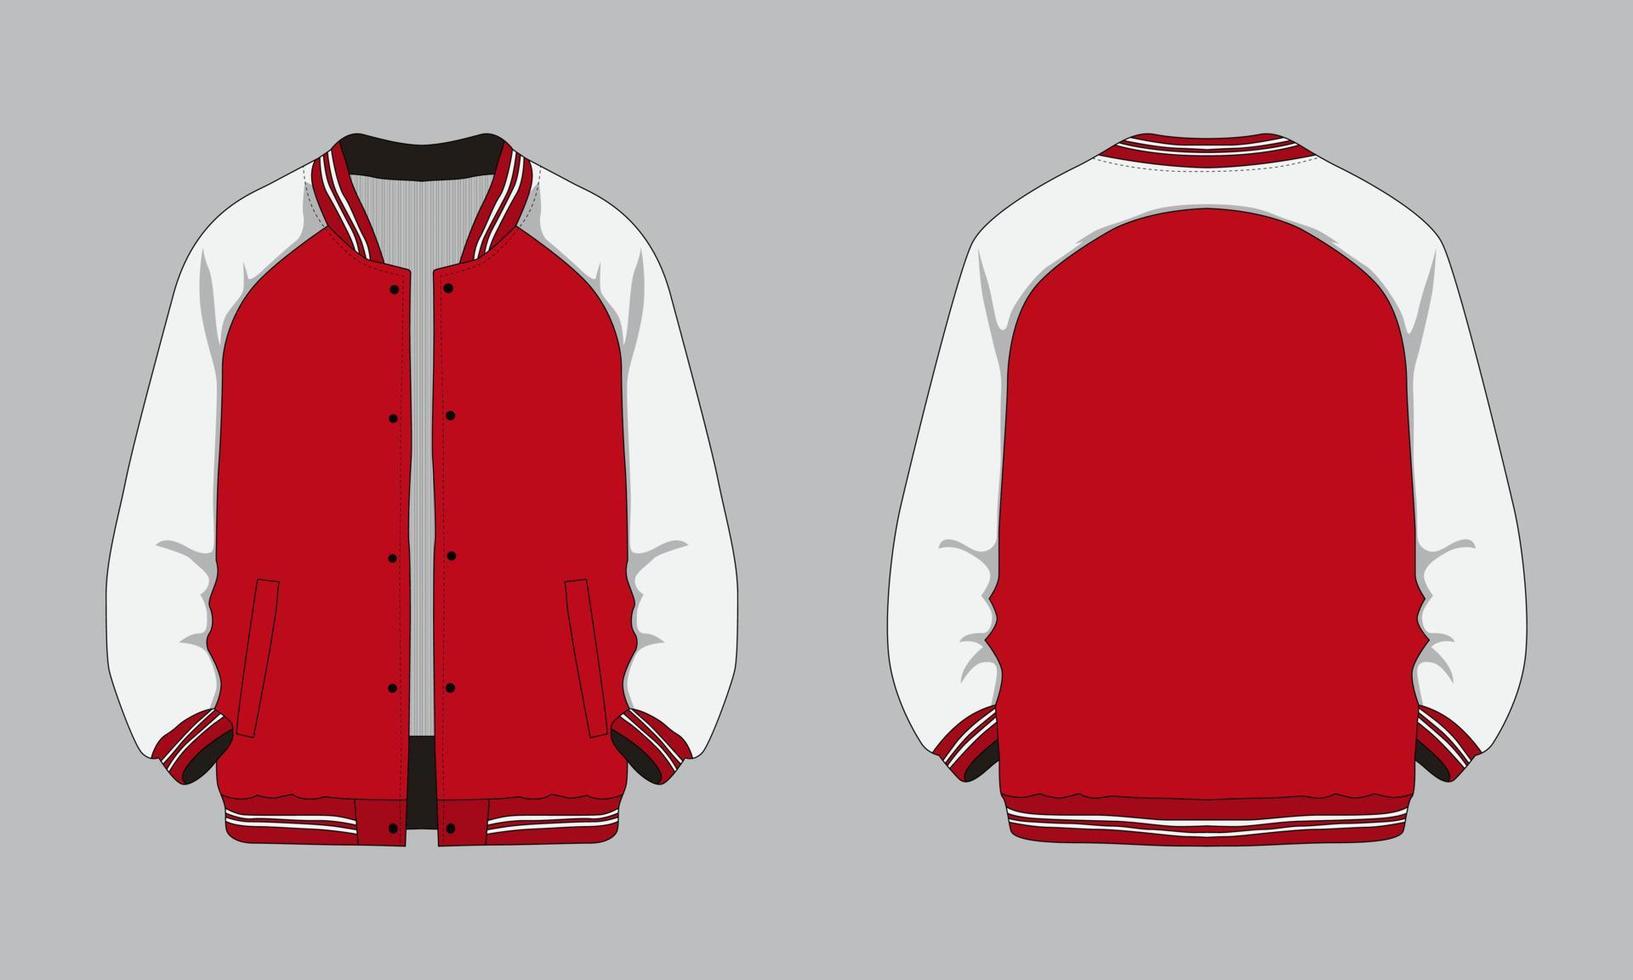 Raglan sleeve varsity jacket front and back. Sports jackets, baseball jackets vector